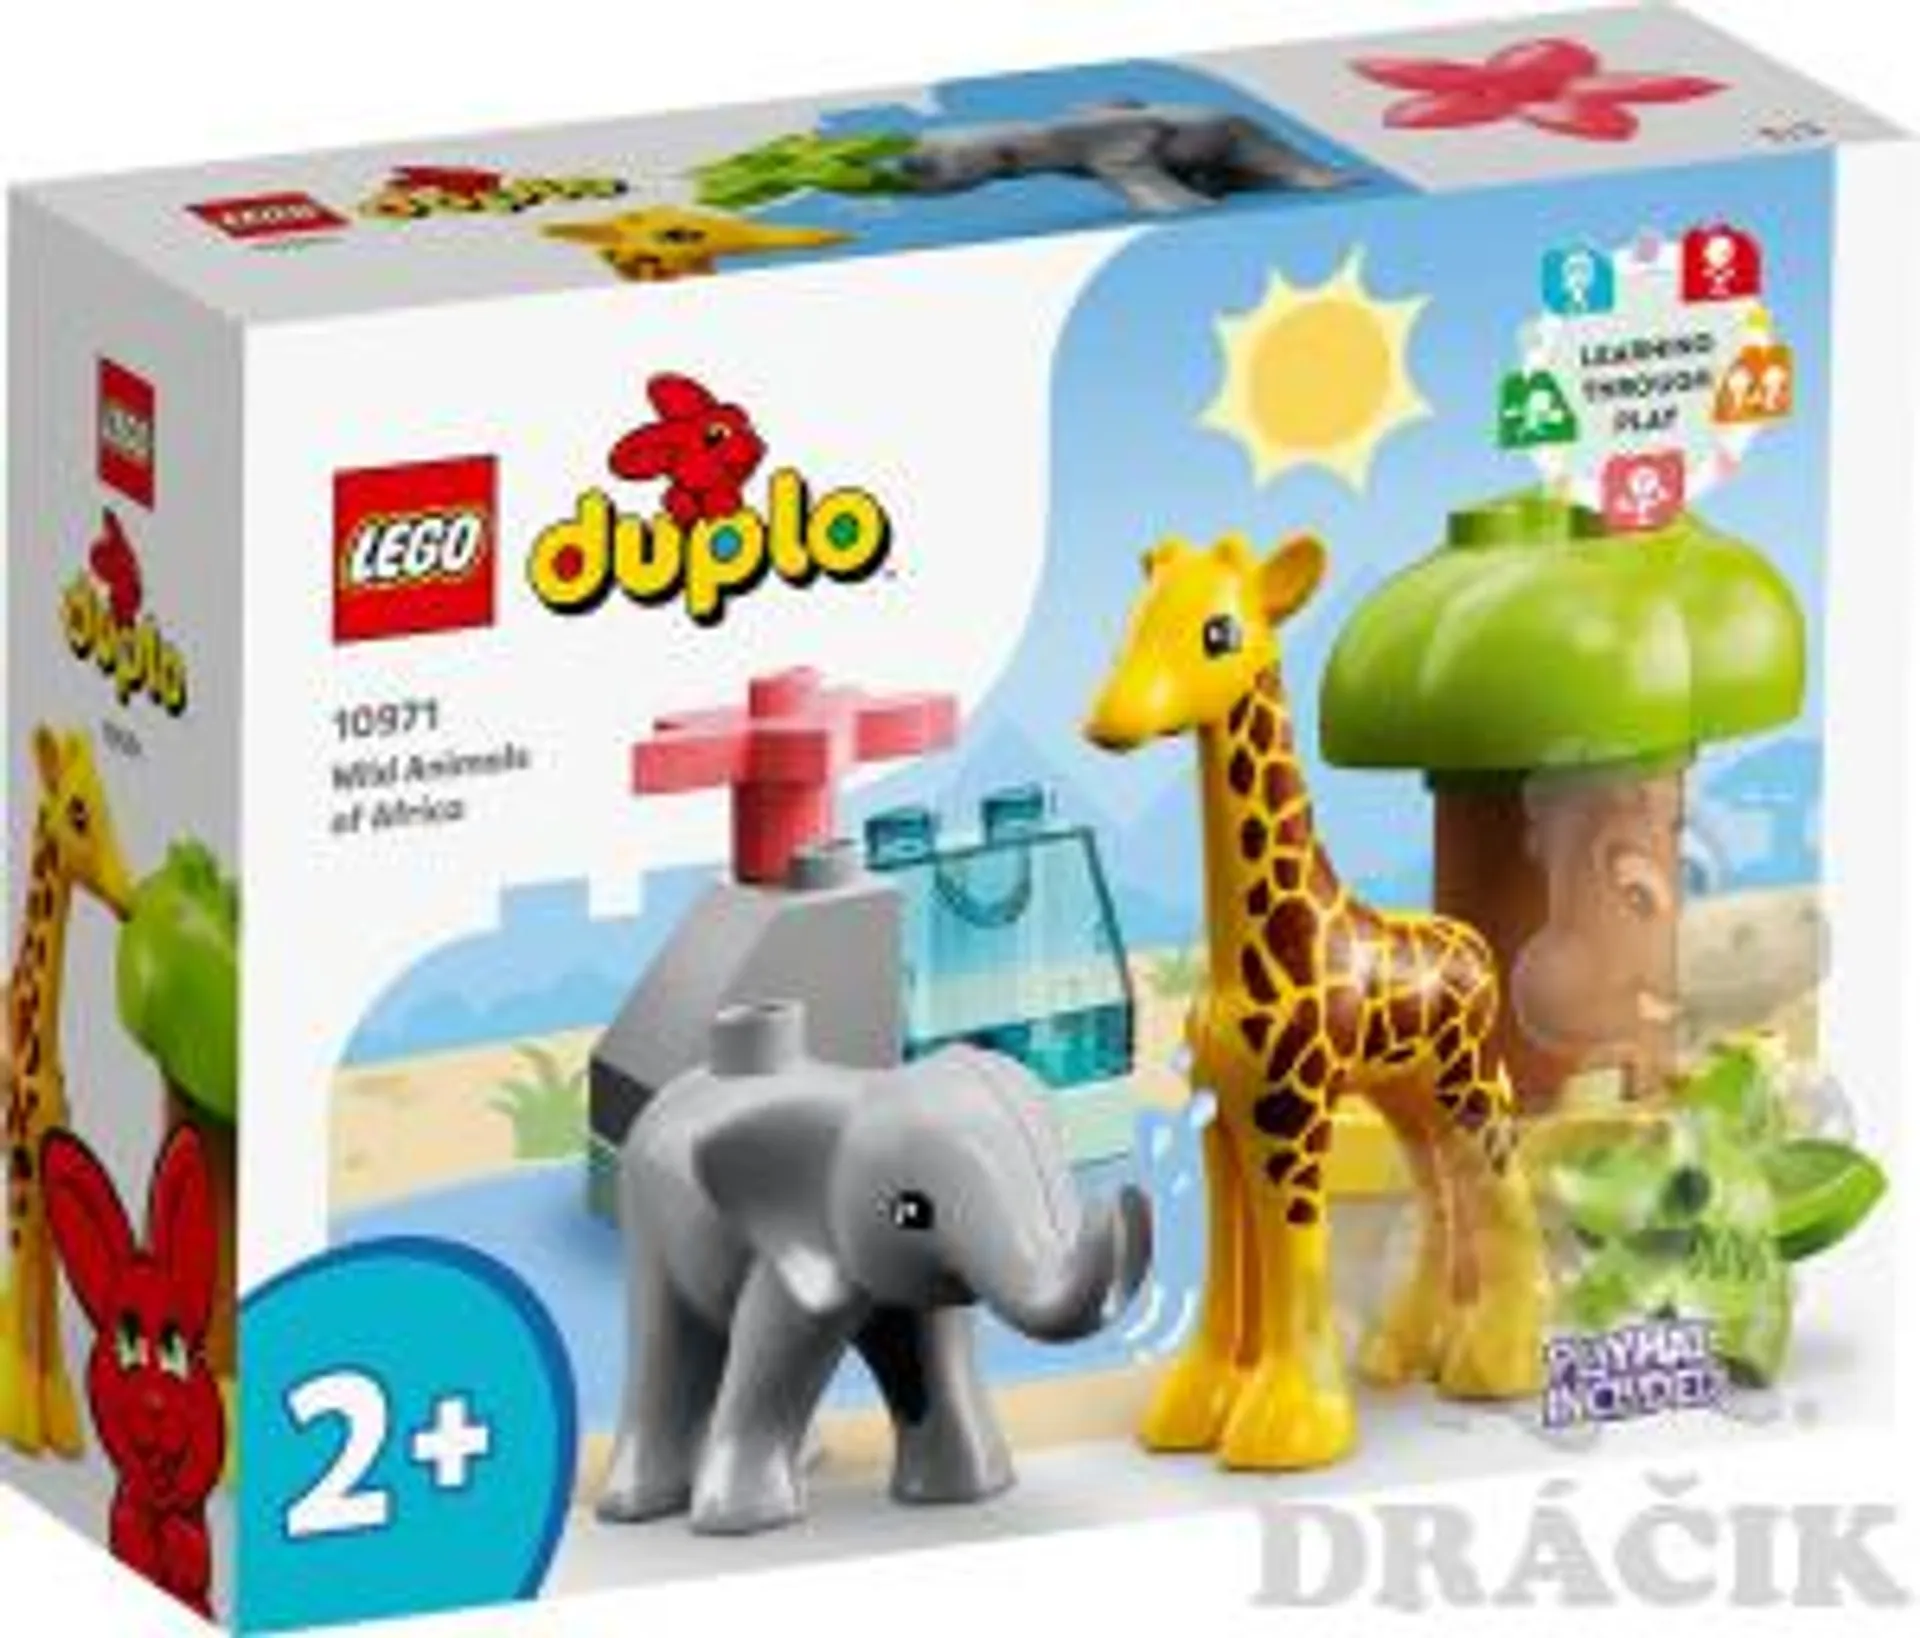 10971 Lego Duplo- Divoké zvieratá Afriky